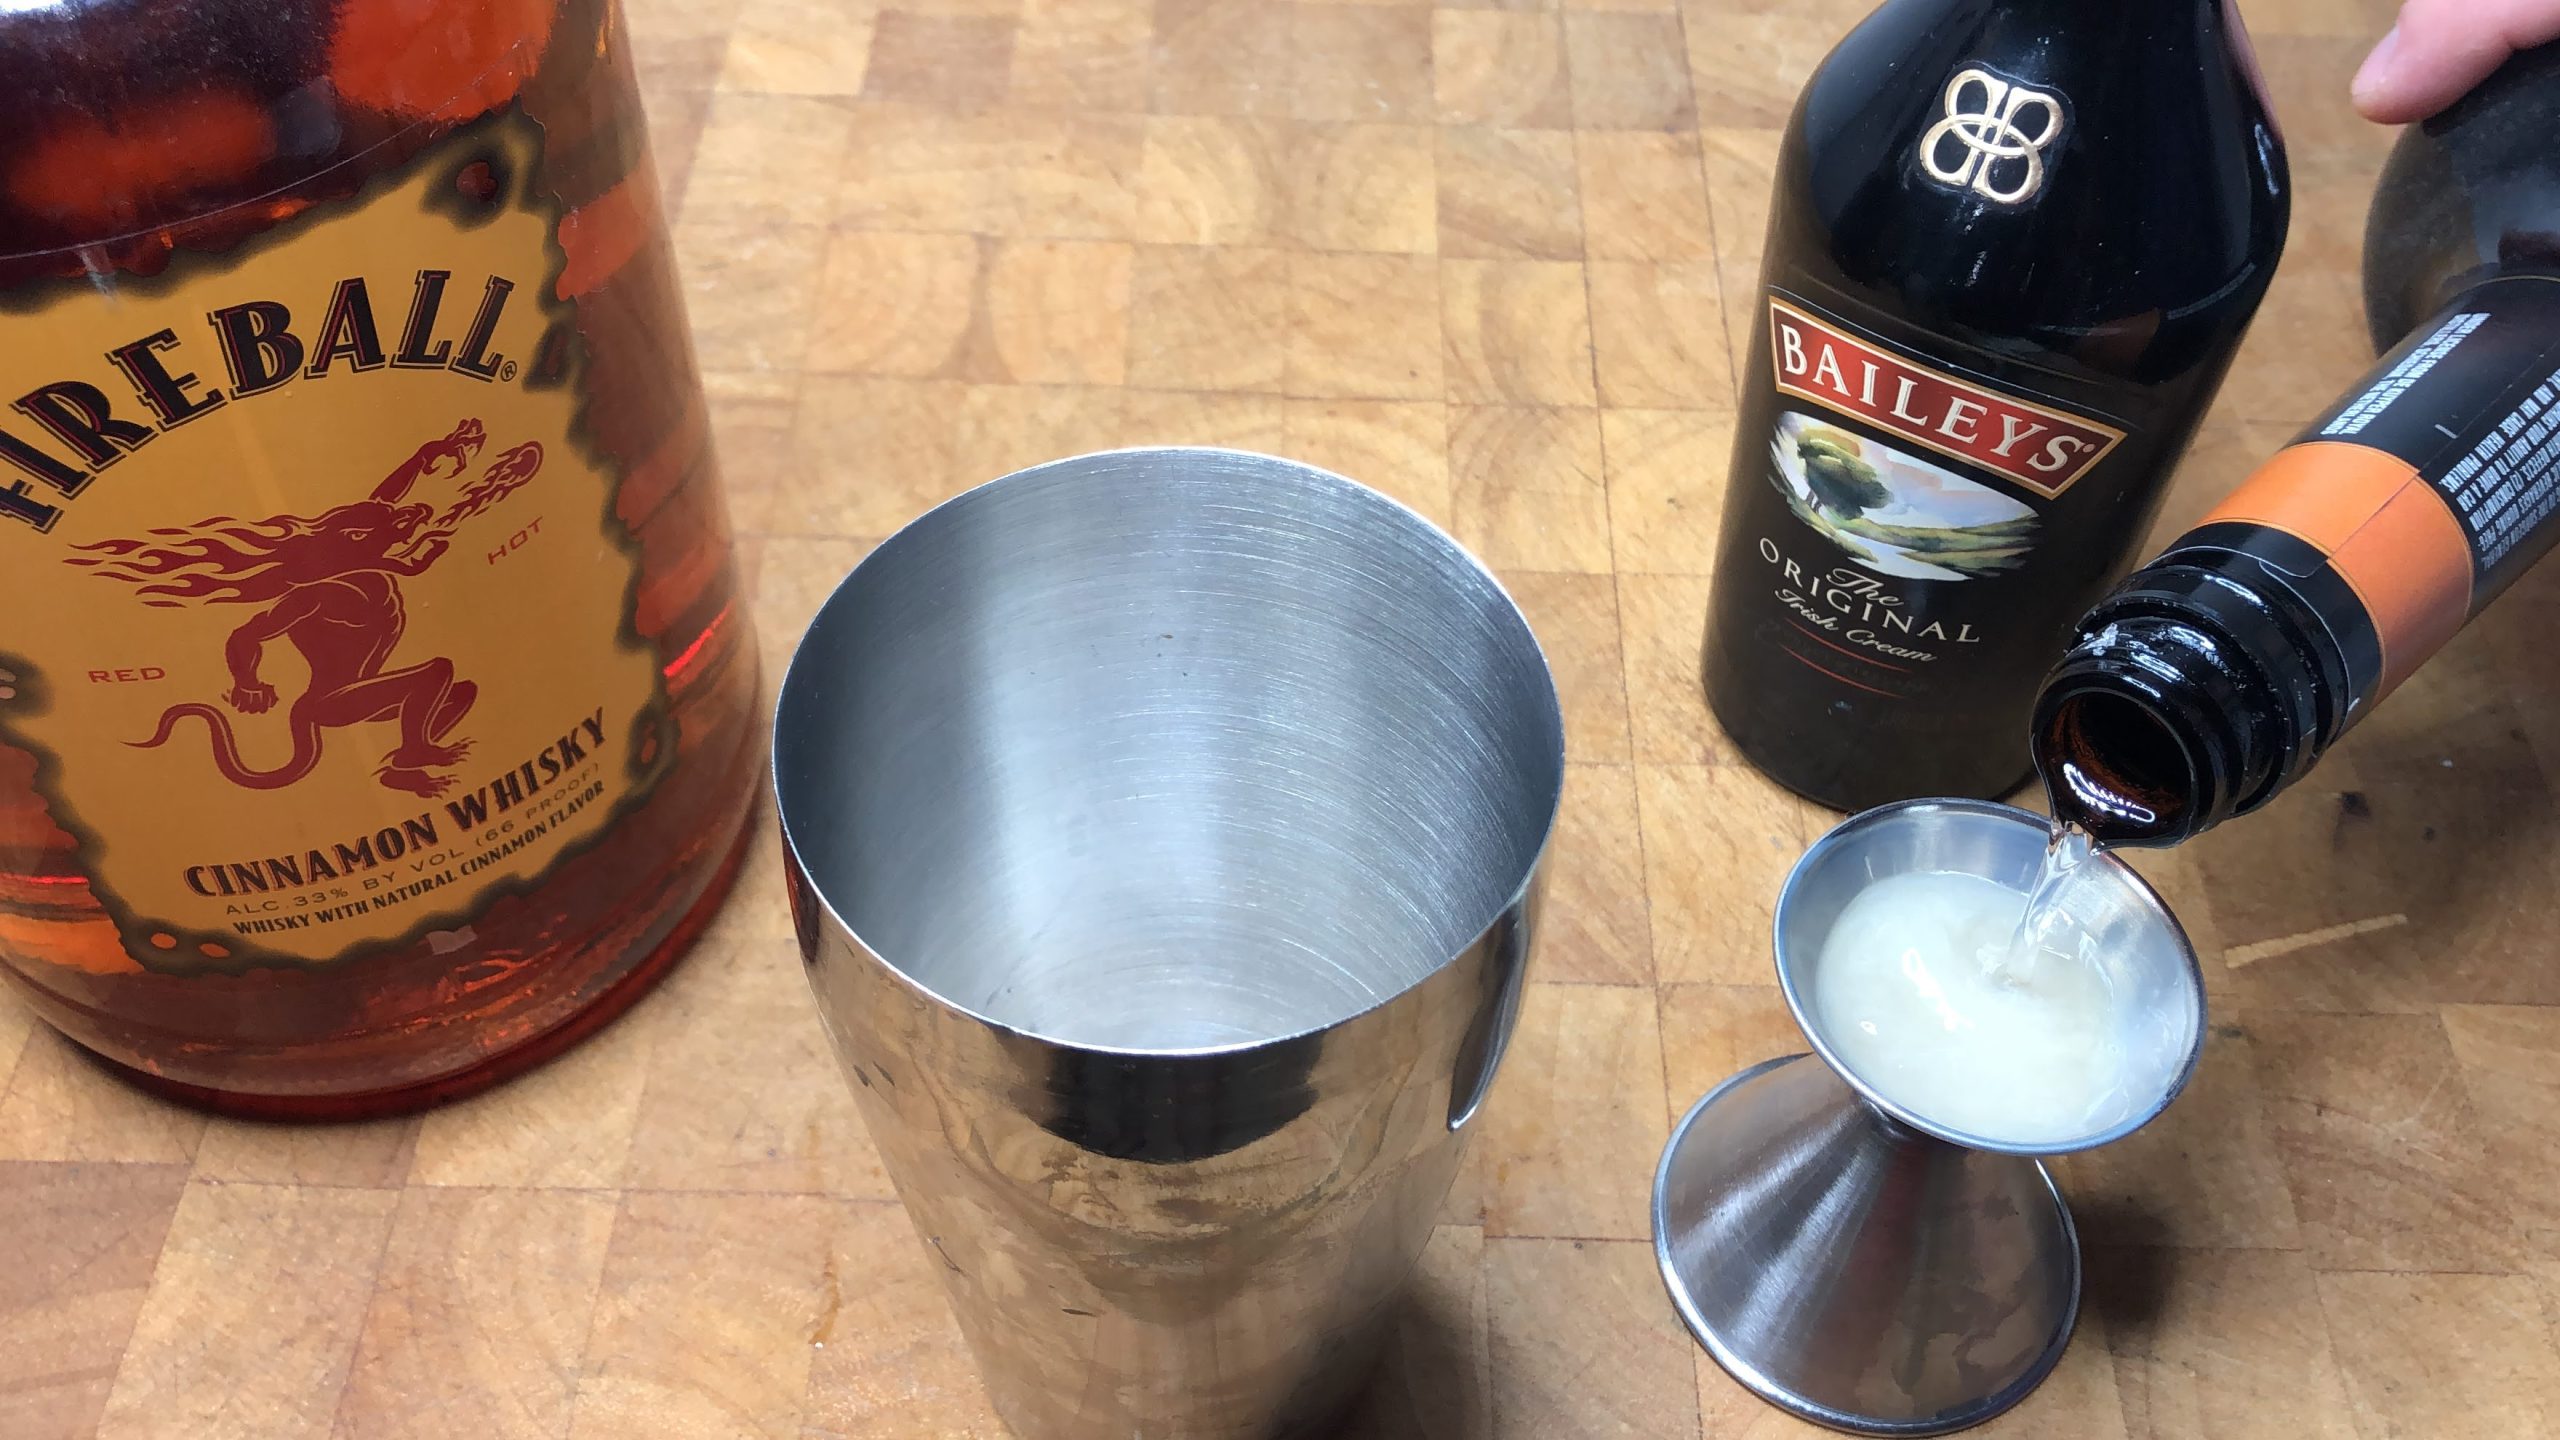 Measuring butterscotch schnapps with a jigger.